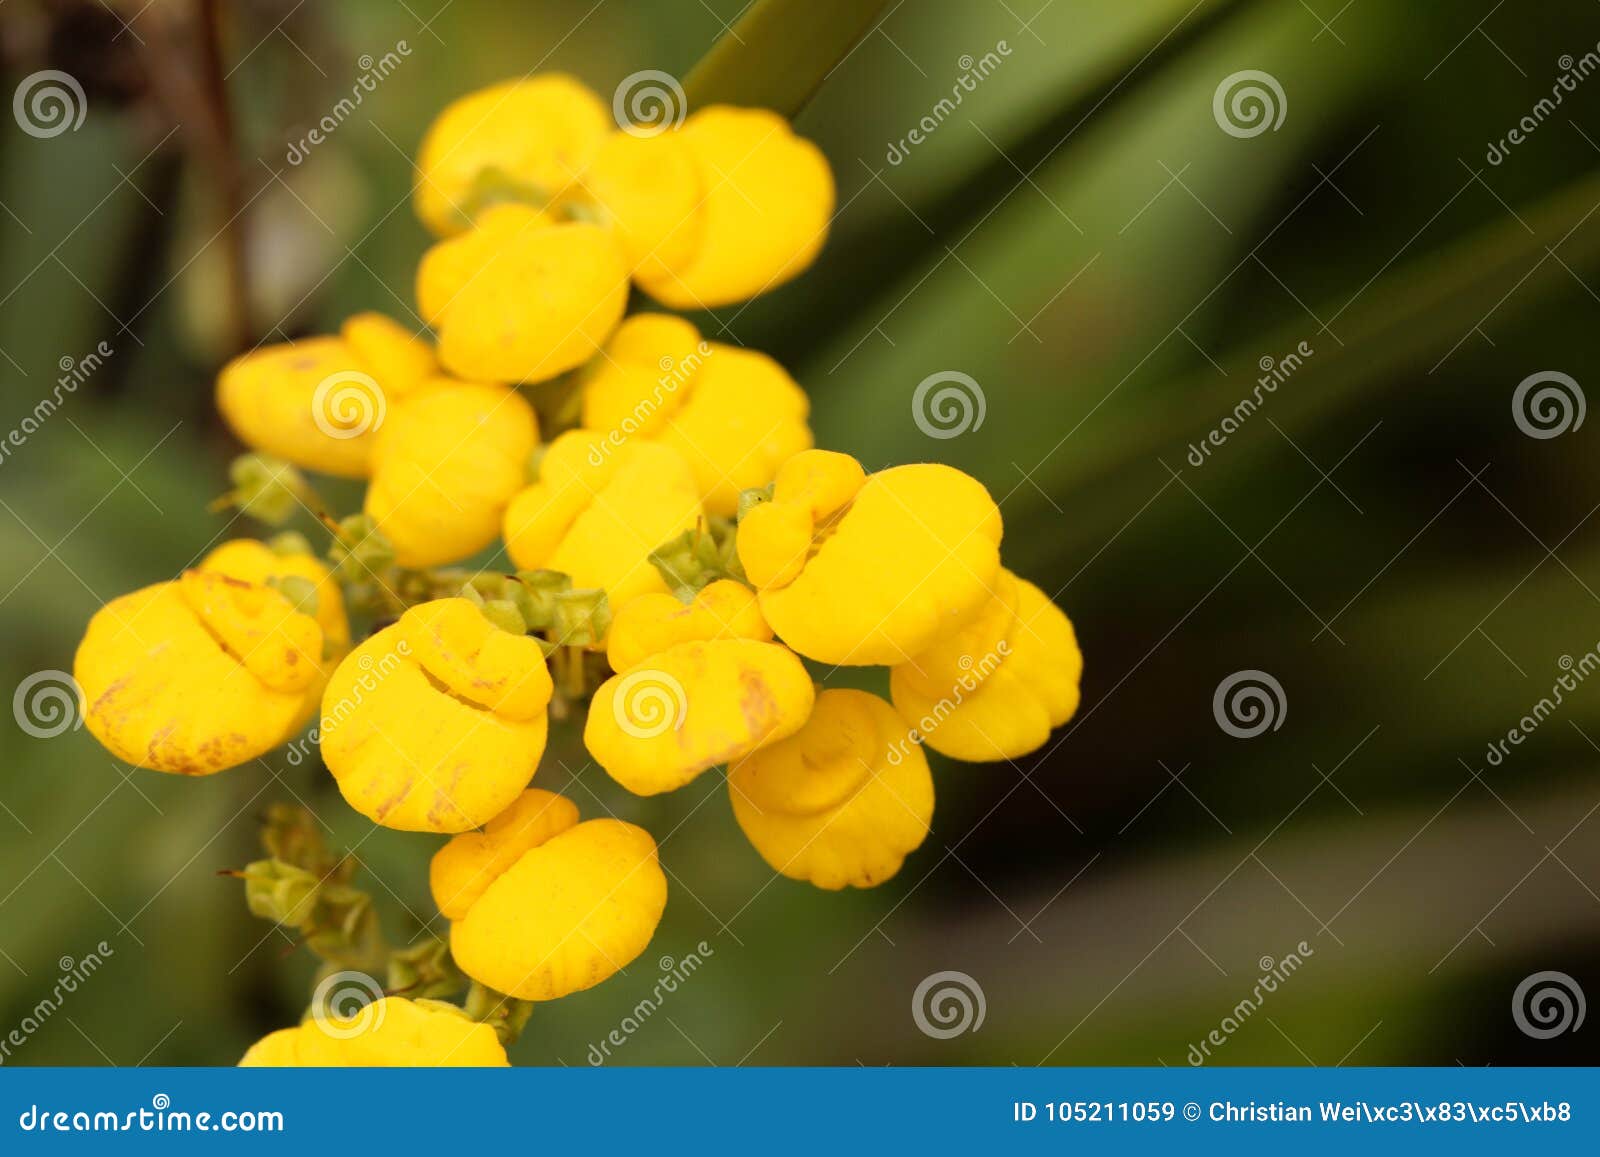 Ladys Purse Slipper Flower Calceolaria Herbeohybrida Stock Photo 268978391  | Shutterstock